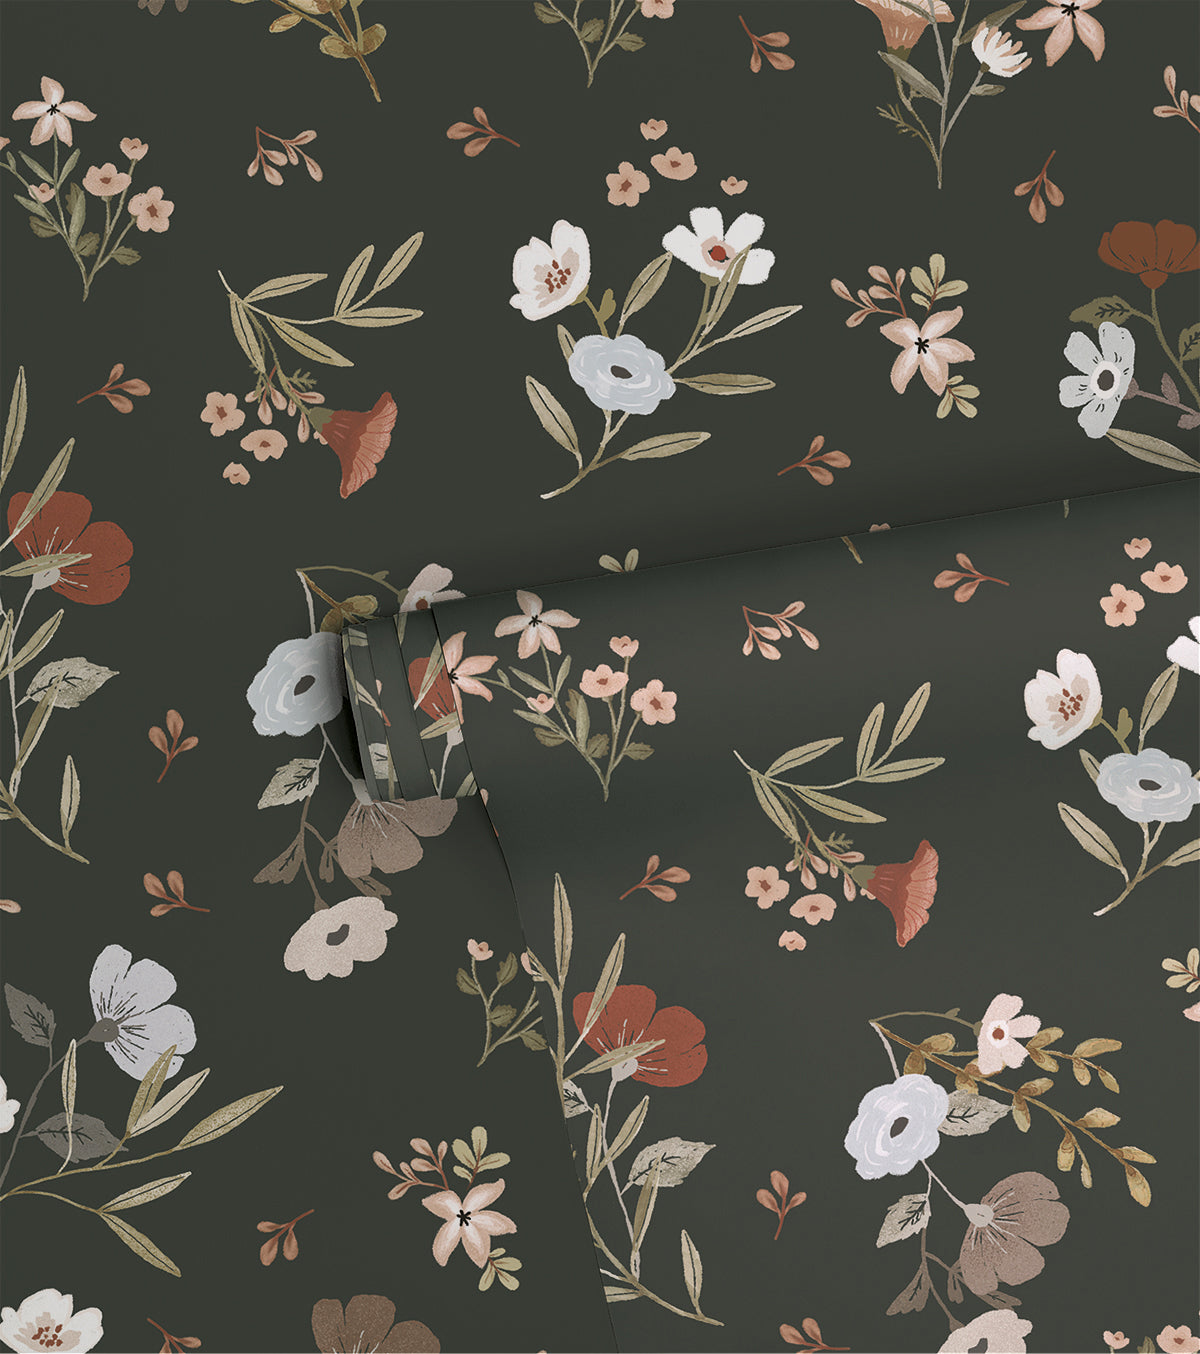 LILYDALE - Children's wallpaper - Soft flowers motif